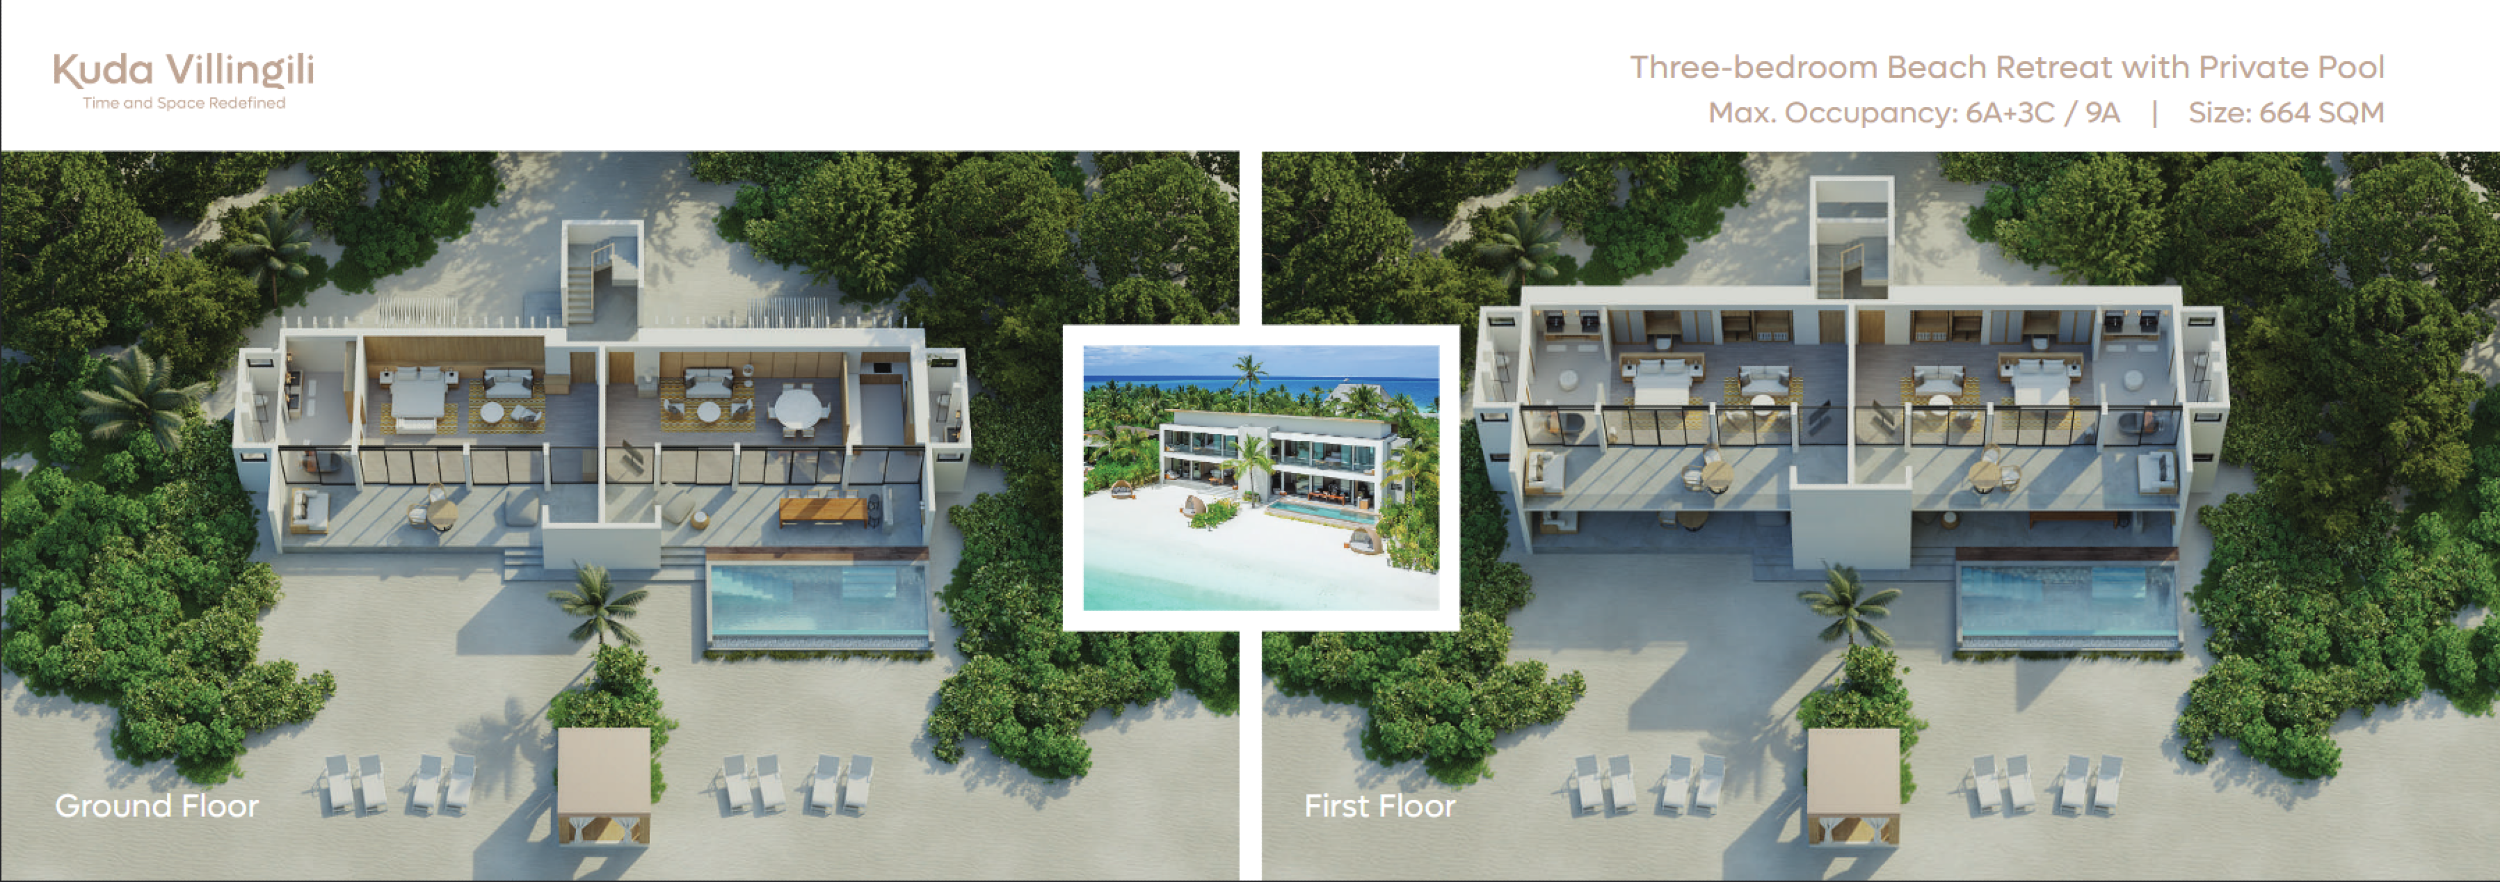 Three-bedroom Beach Retreat with Private Pool - Floor plan - Kuda Villingili Resort Maldives